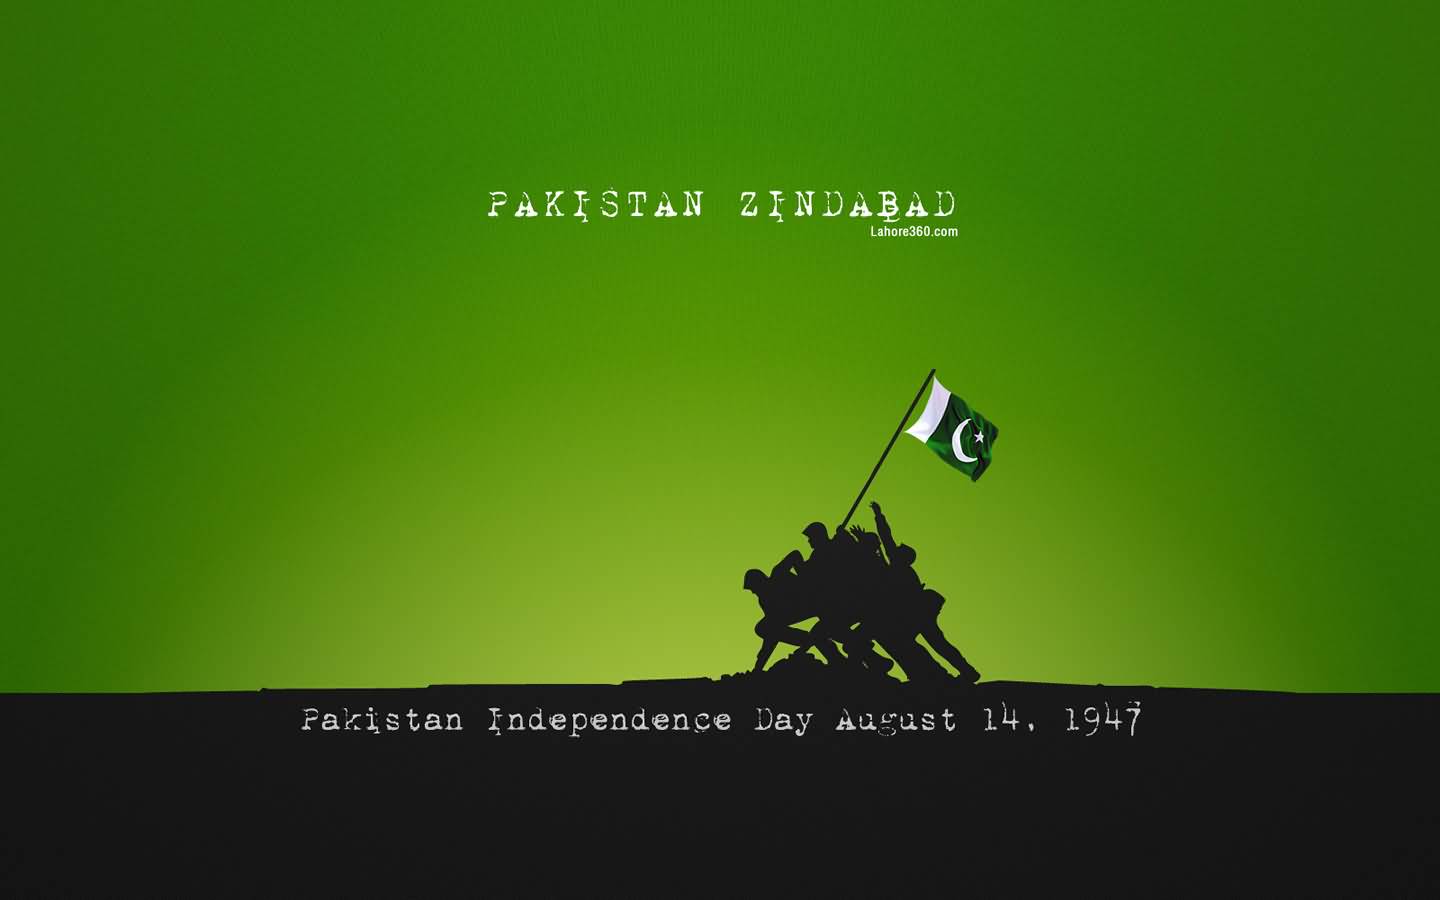 Pakistan Zindabad Pakistan Independence Day August 14, 1947